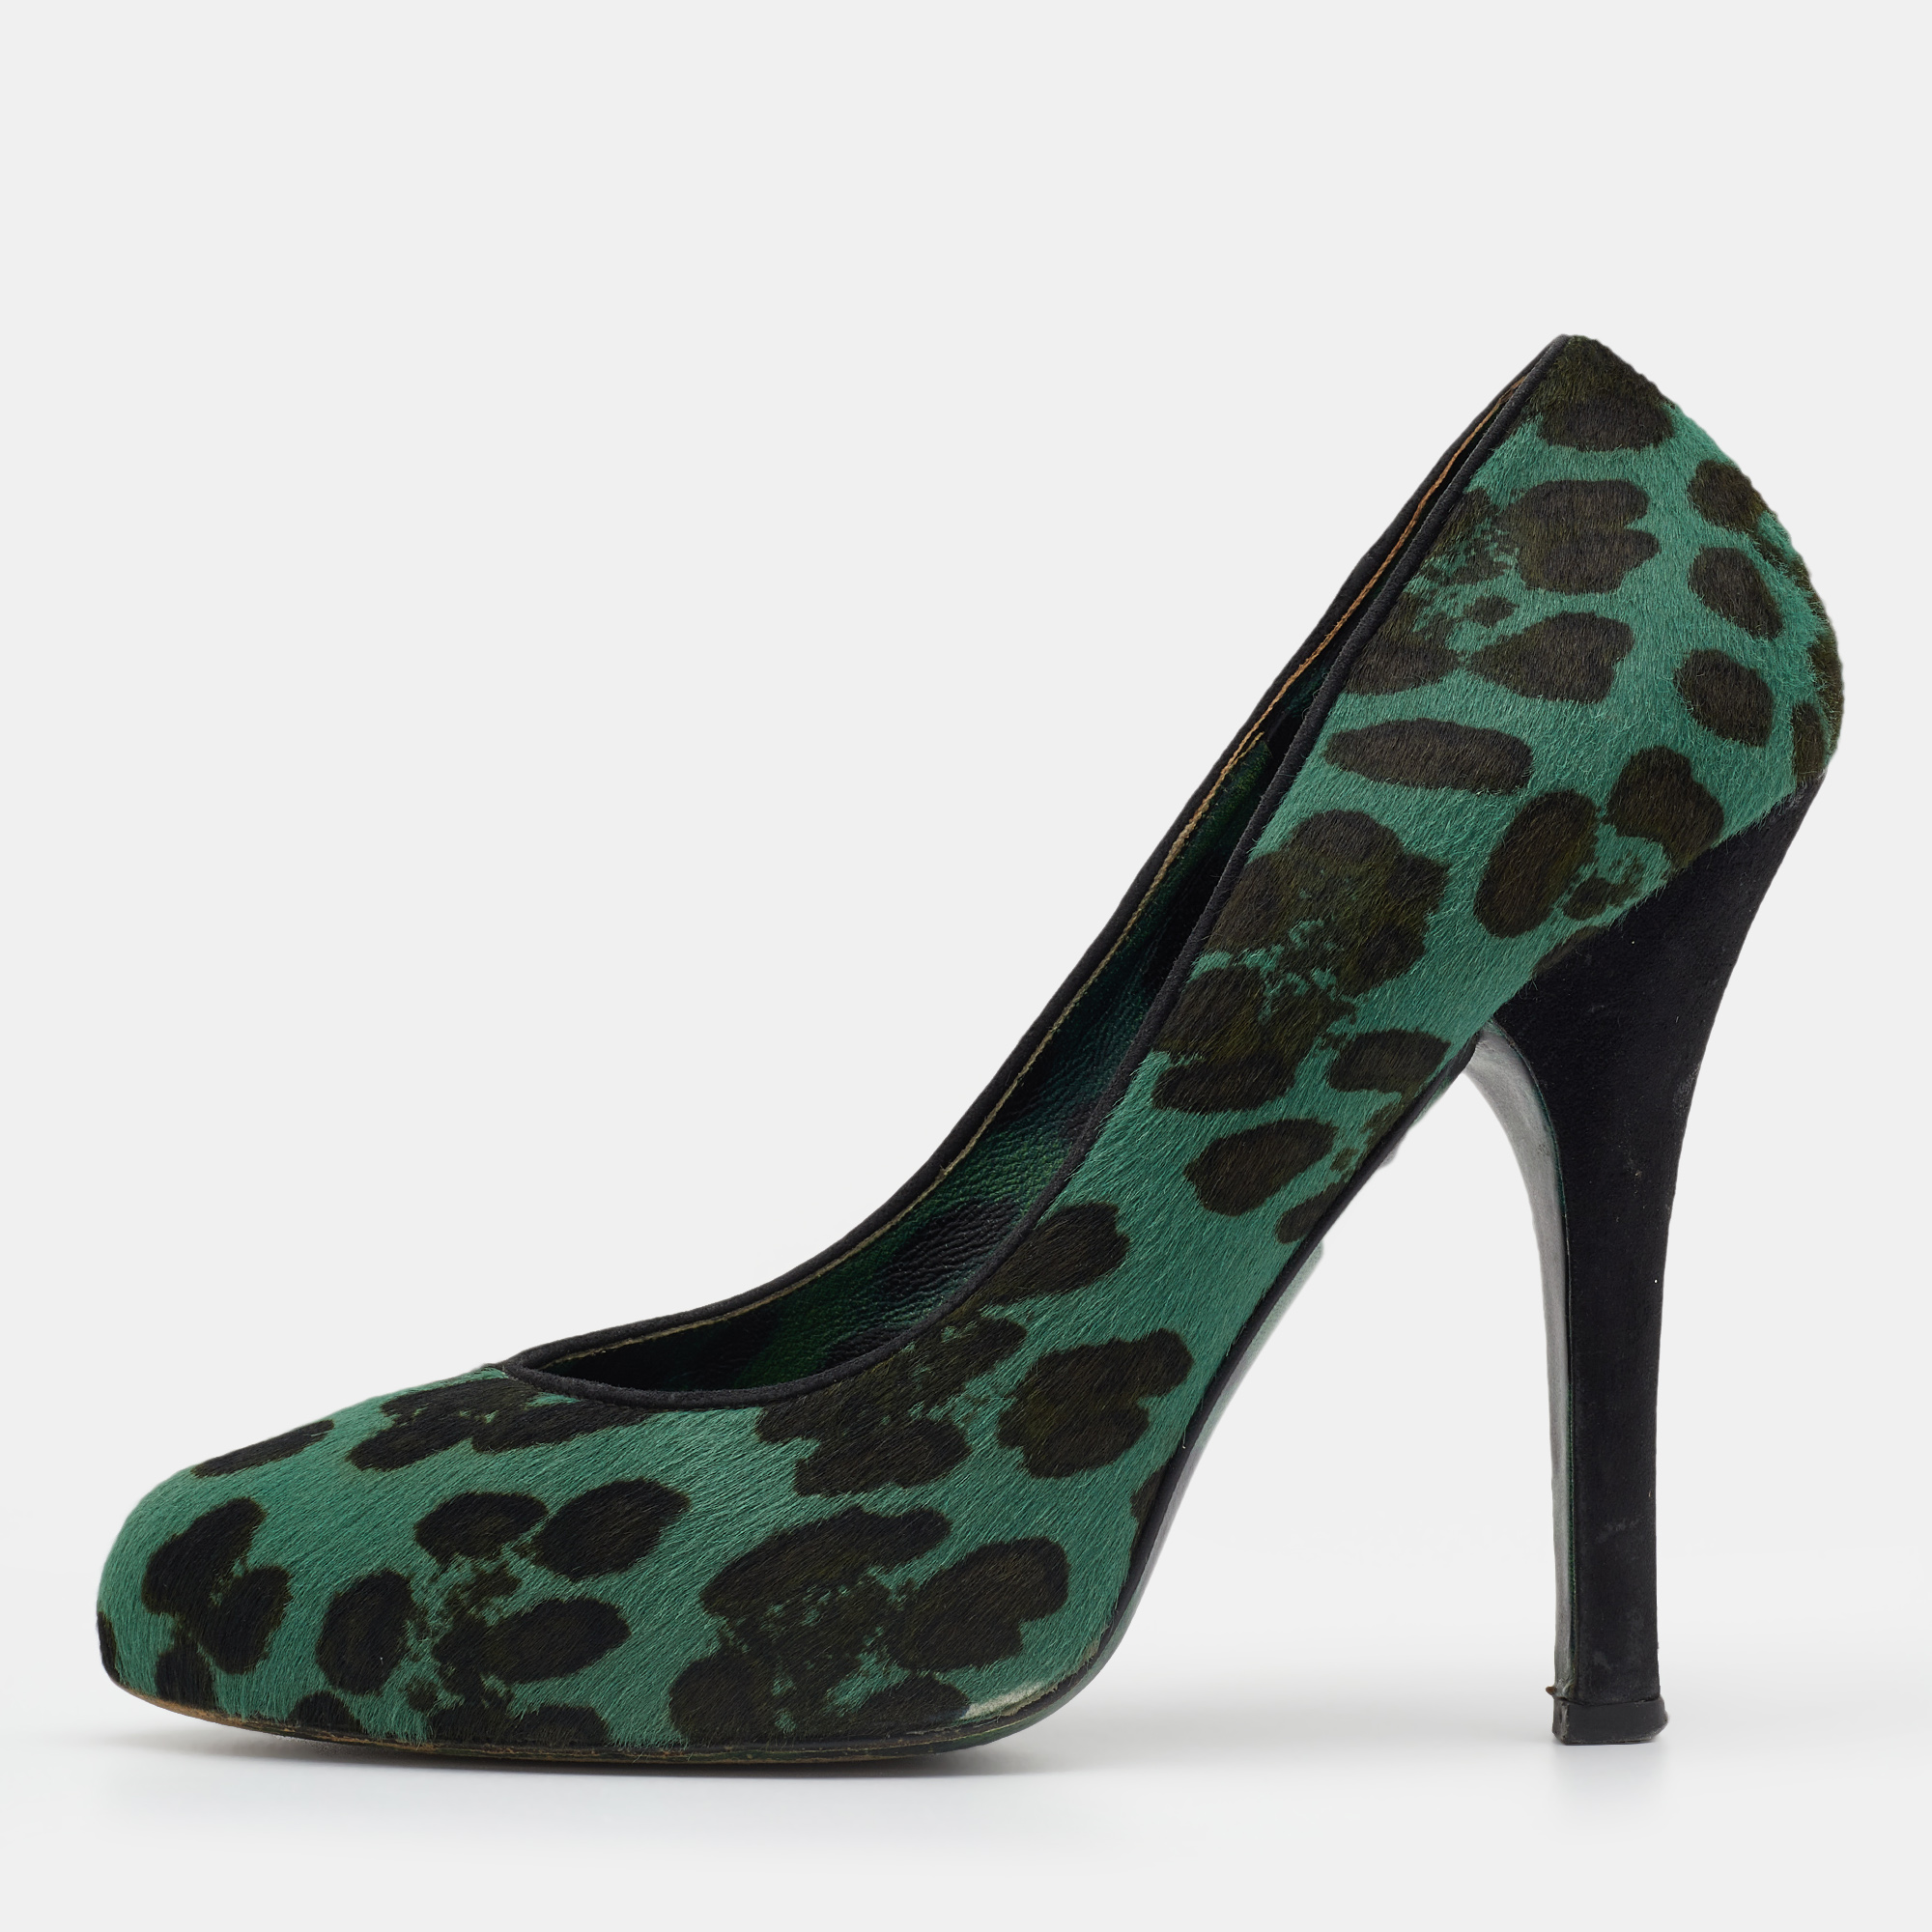 Dolce & gabbana green/black leopard print calf hair platform pumps size 37